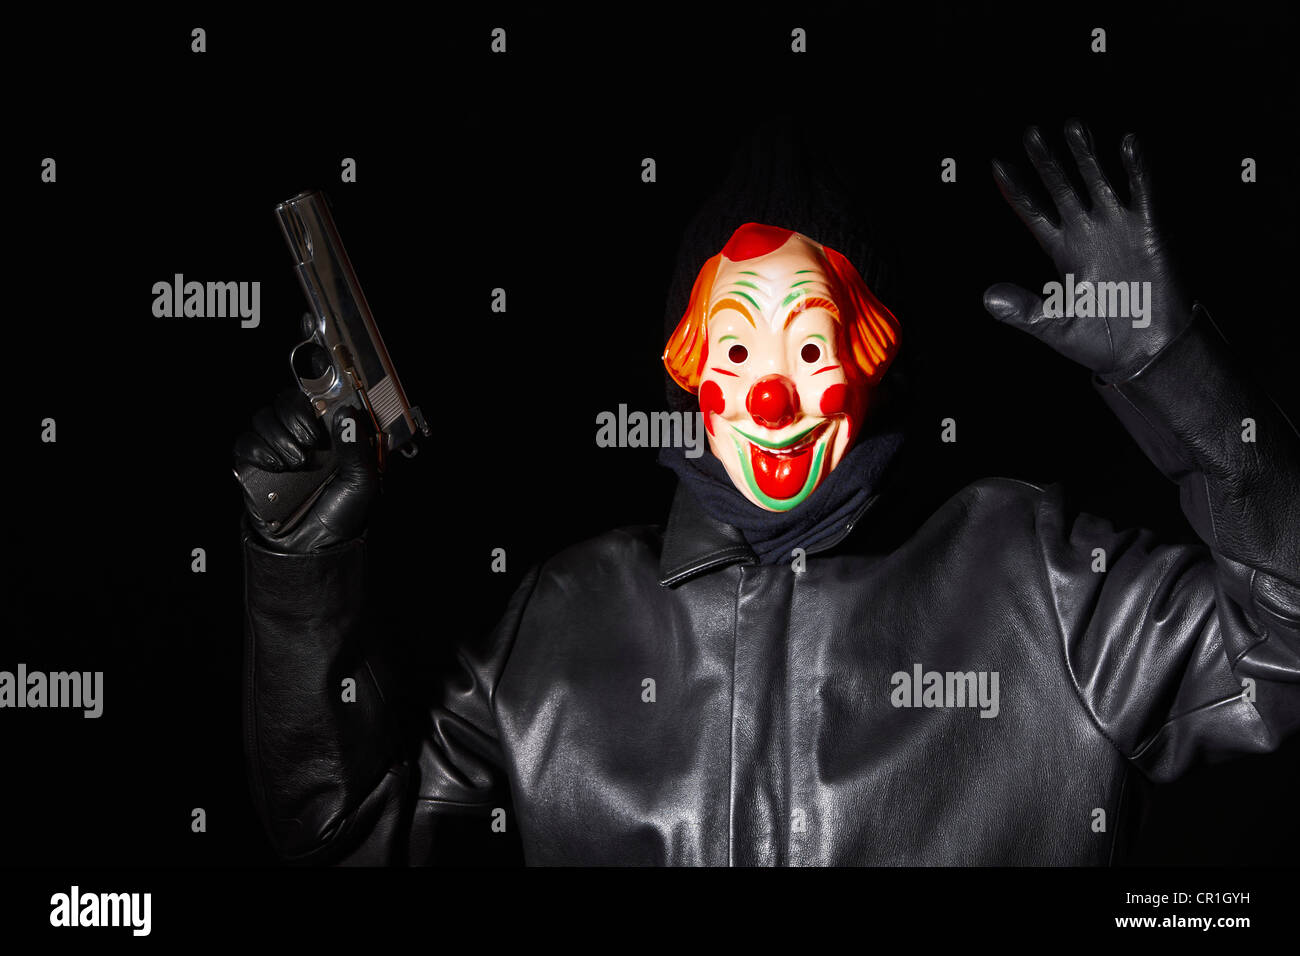 Man in clown mask holding gun Stock Photo